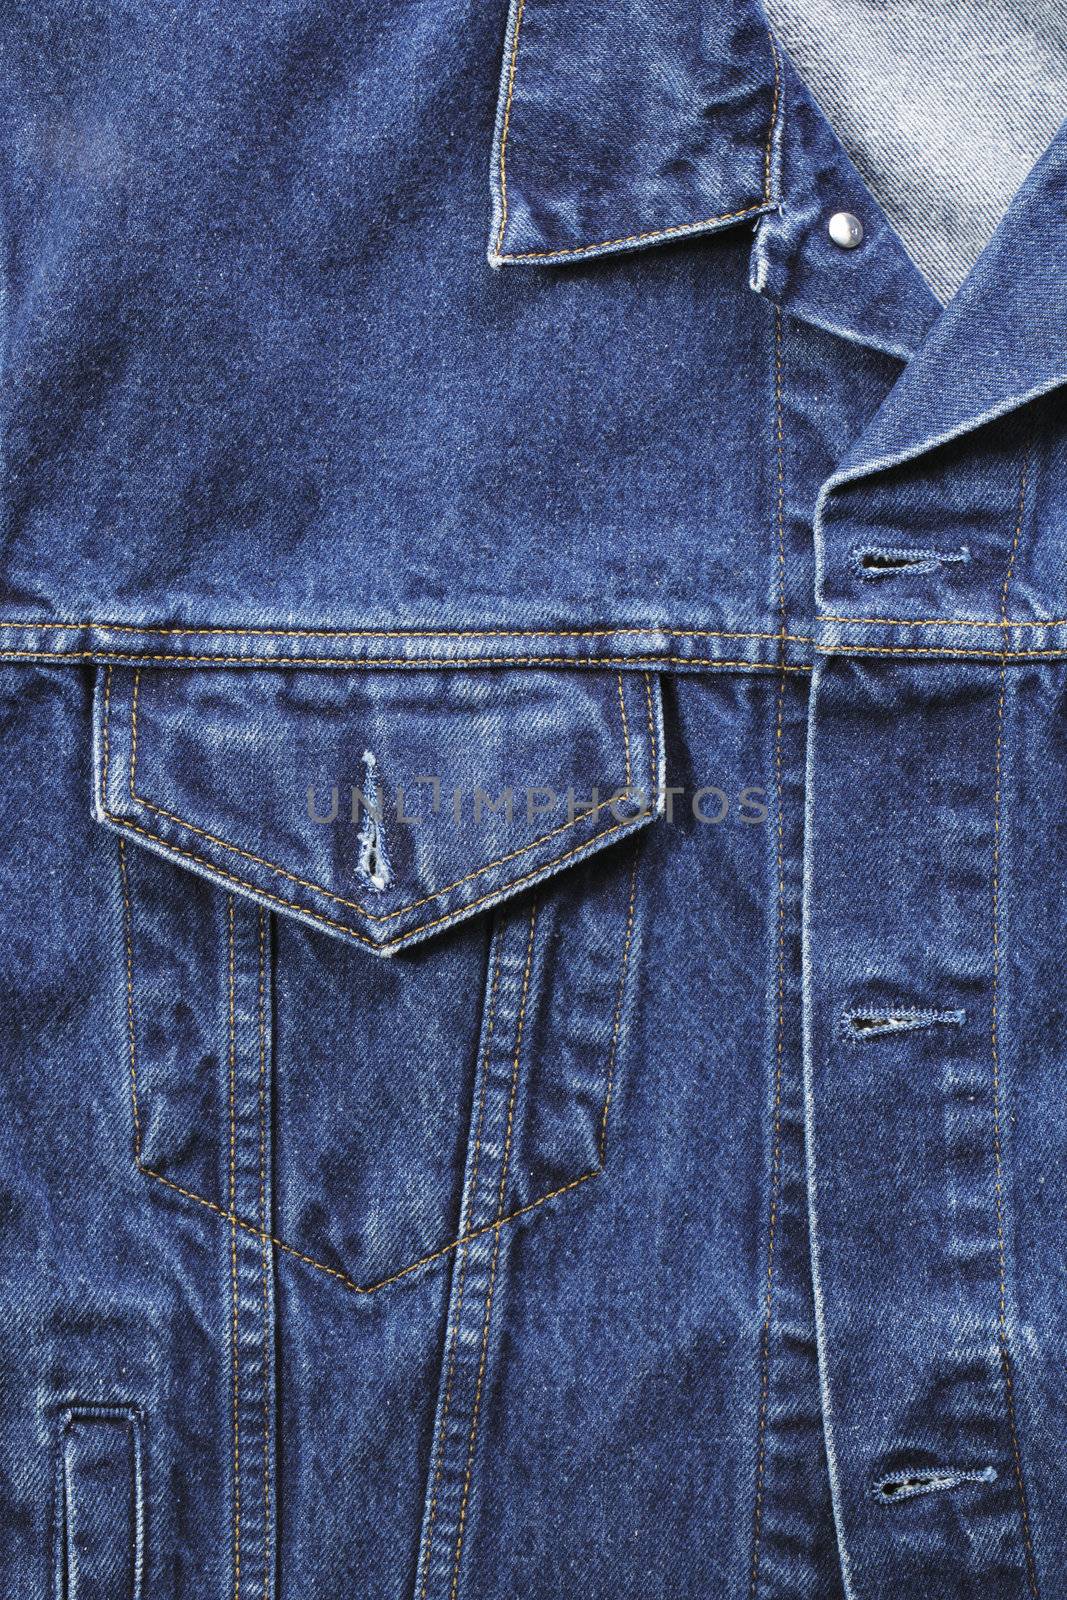 closeup of a blue denim jacket